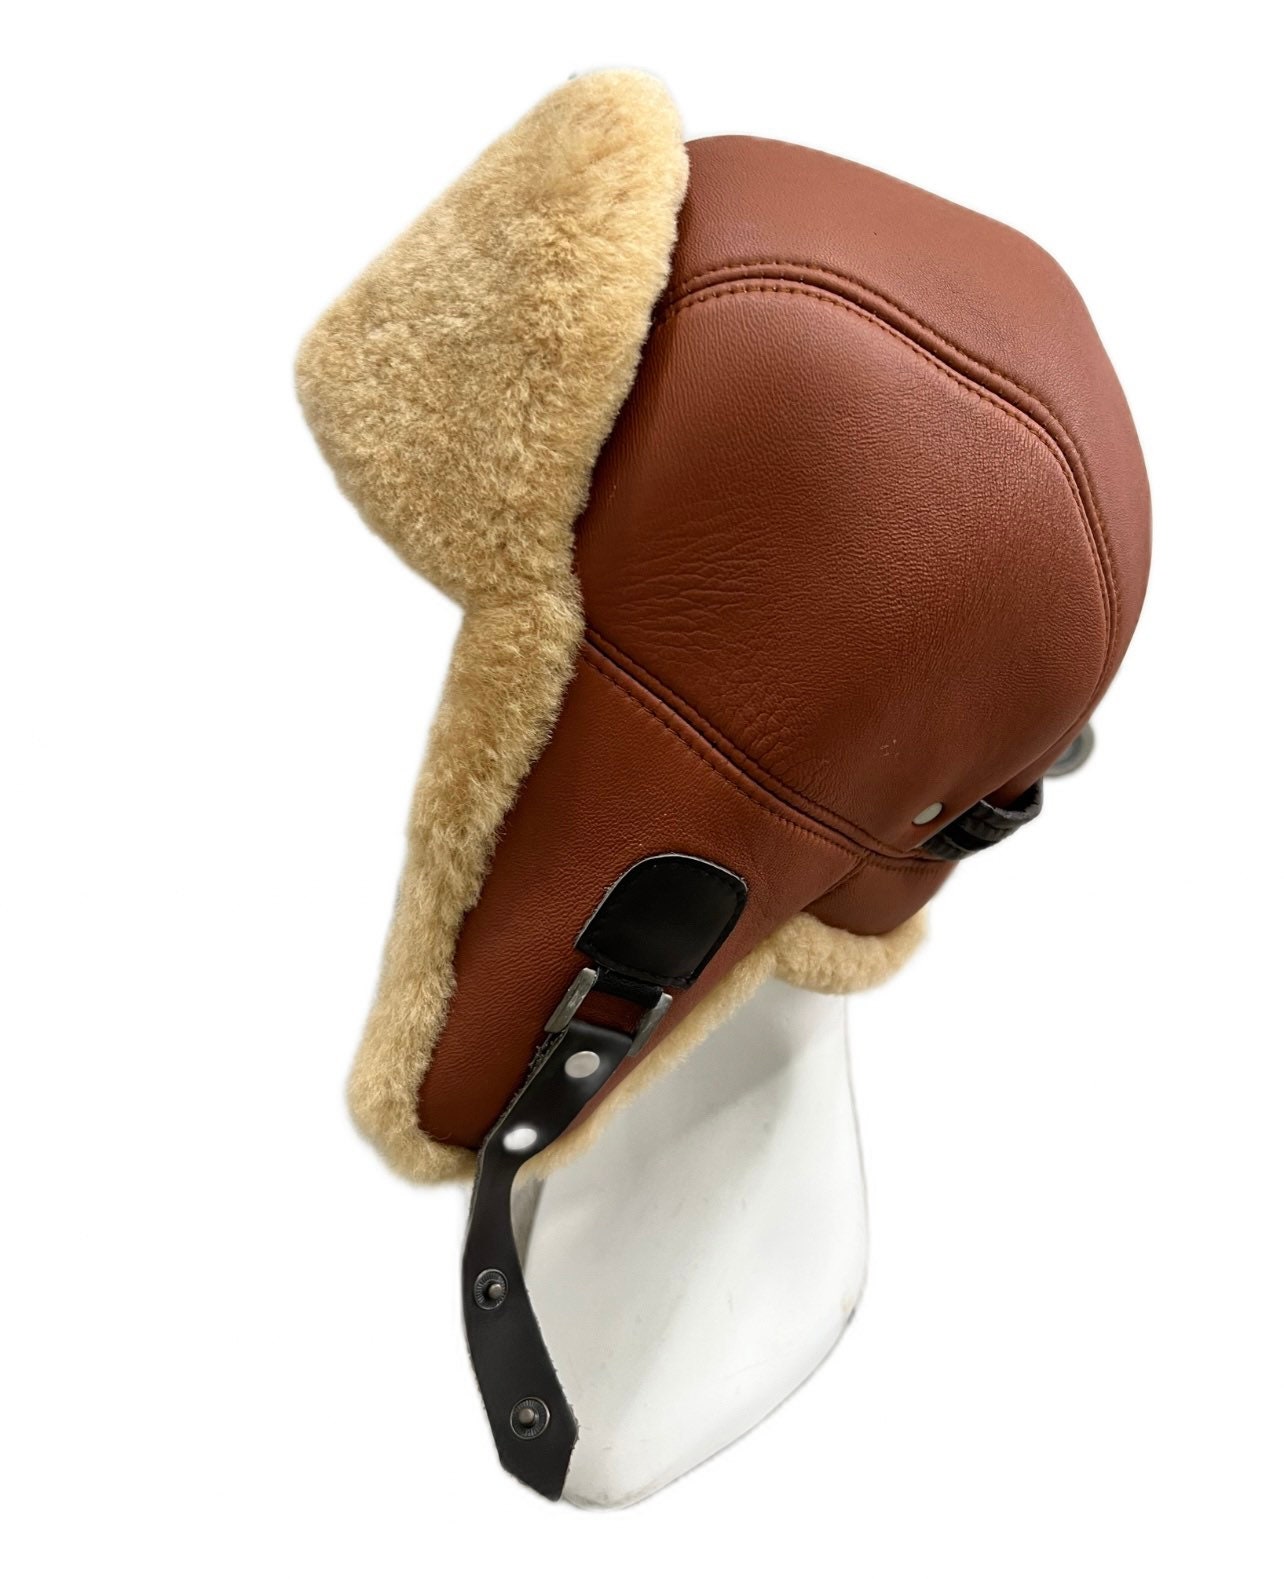 Sheepskin Aviator Hat - Medium, Black (Smooth Nappa Leather)